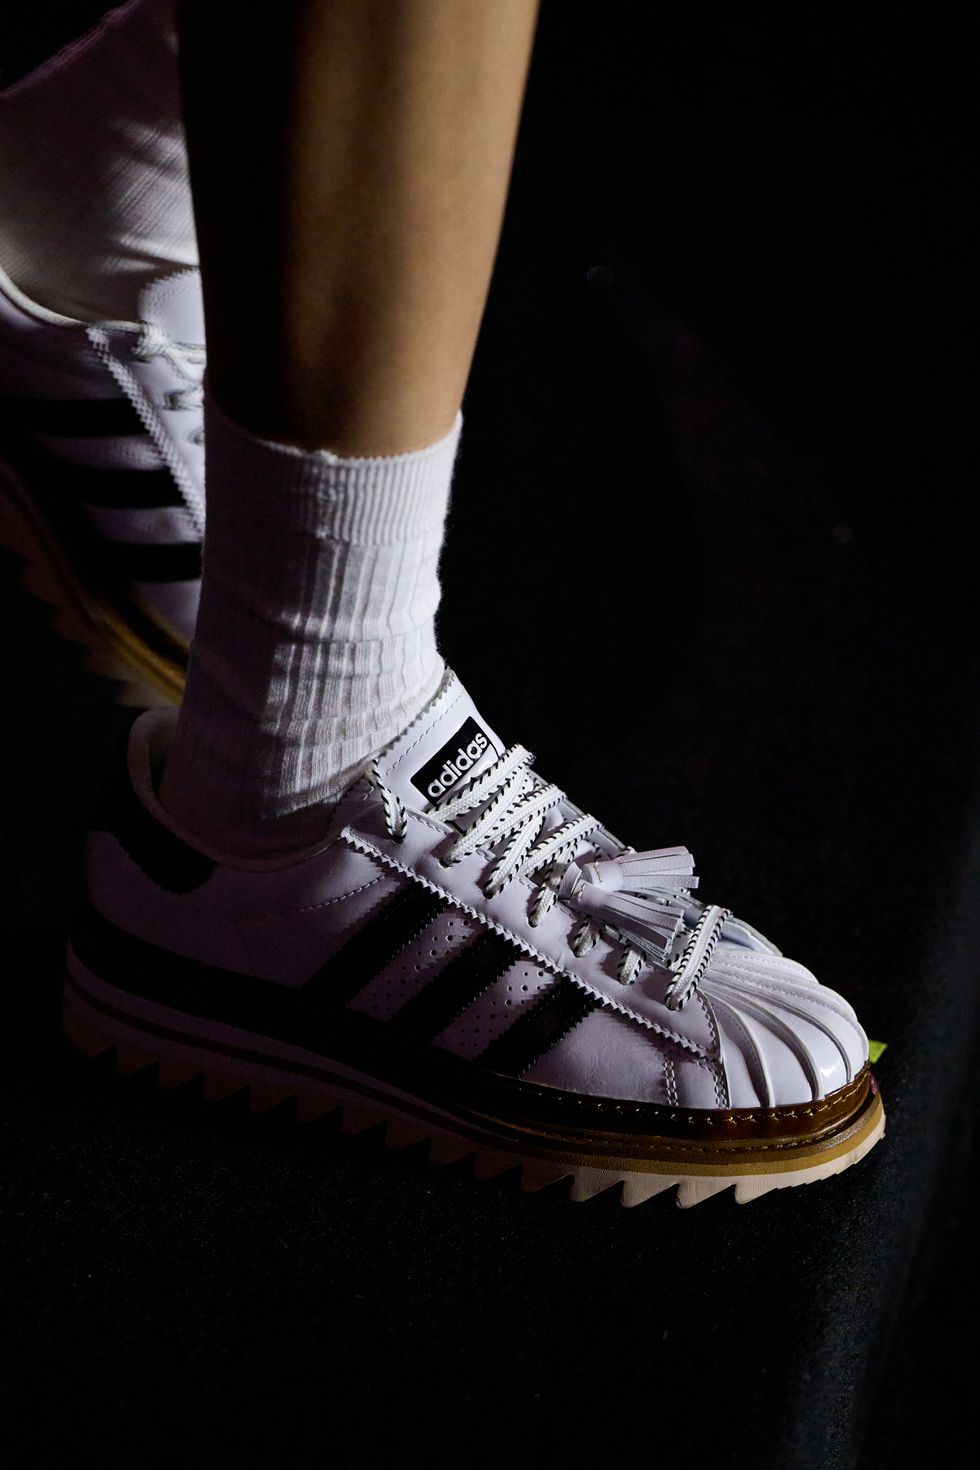 Adidas Originals by Edison Chen Made a Phoebe Philo–Esque Sneaker